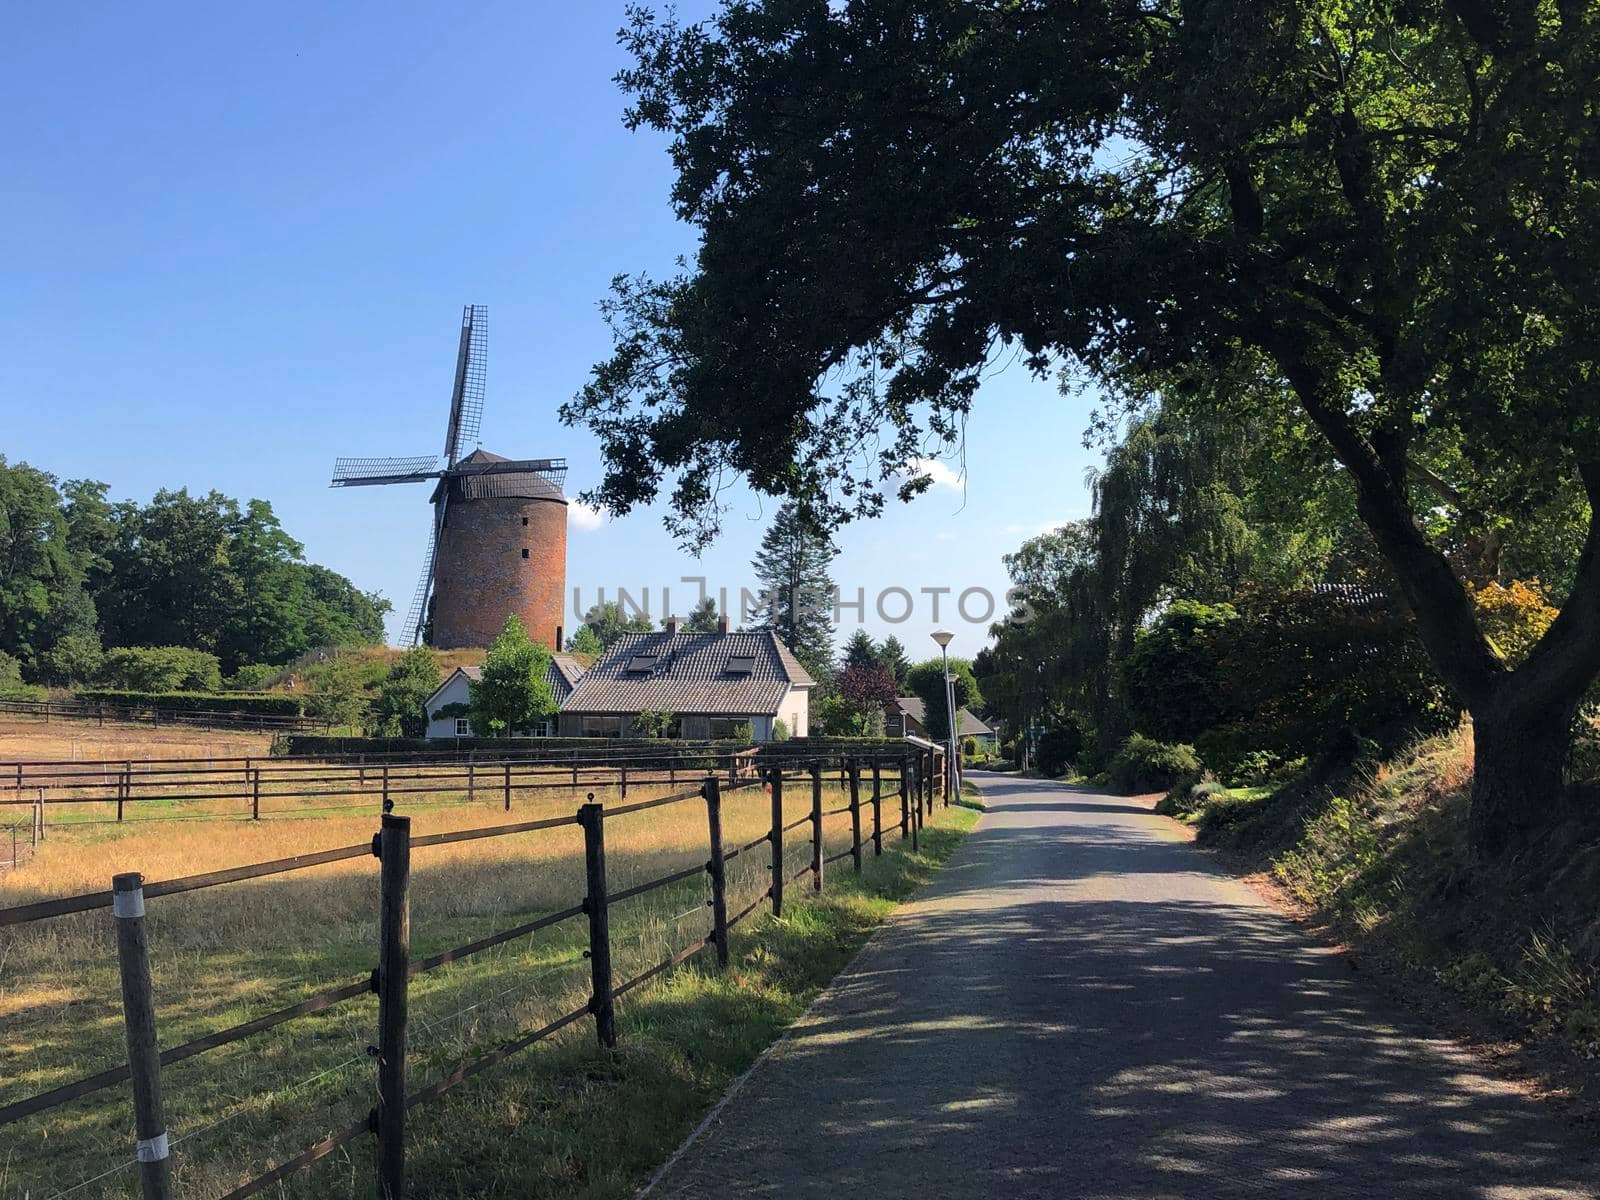 Windmill the Rosmolen in Zeddam by traveltelly